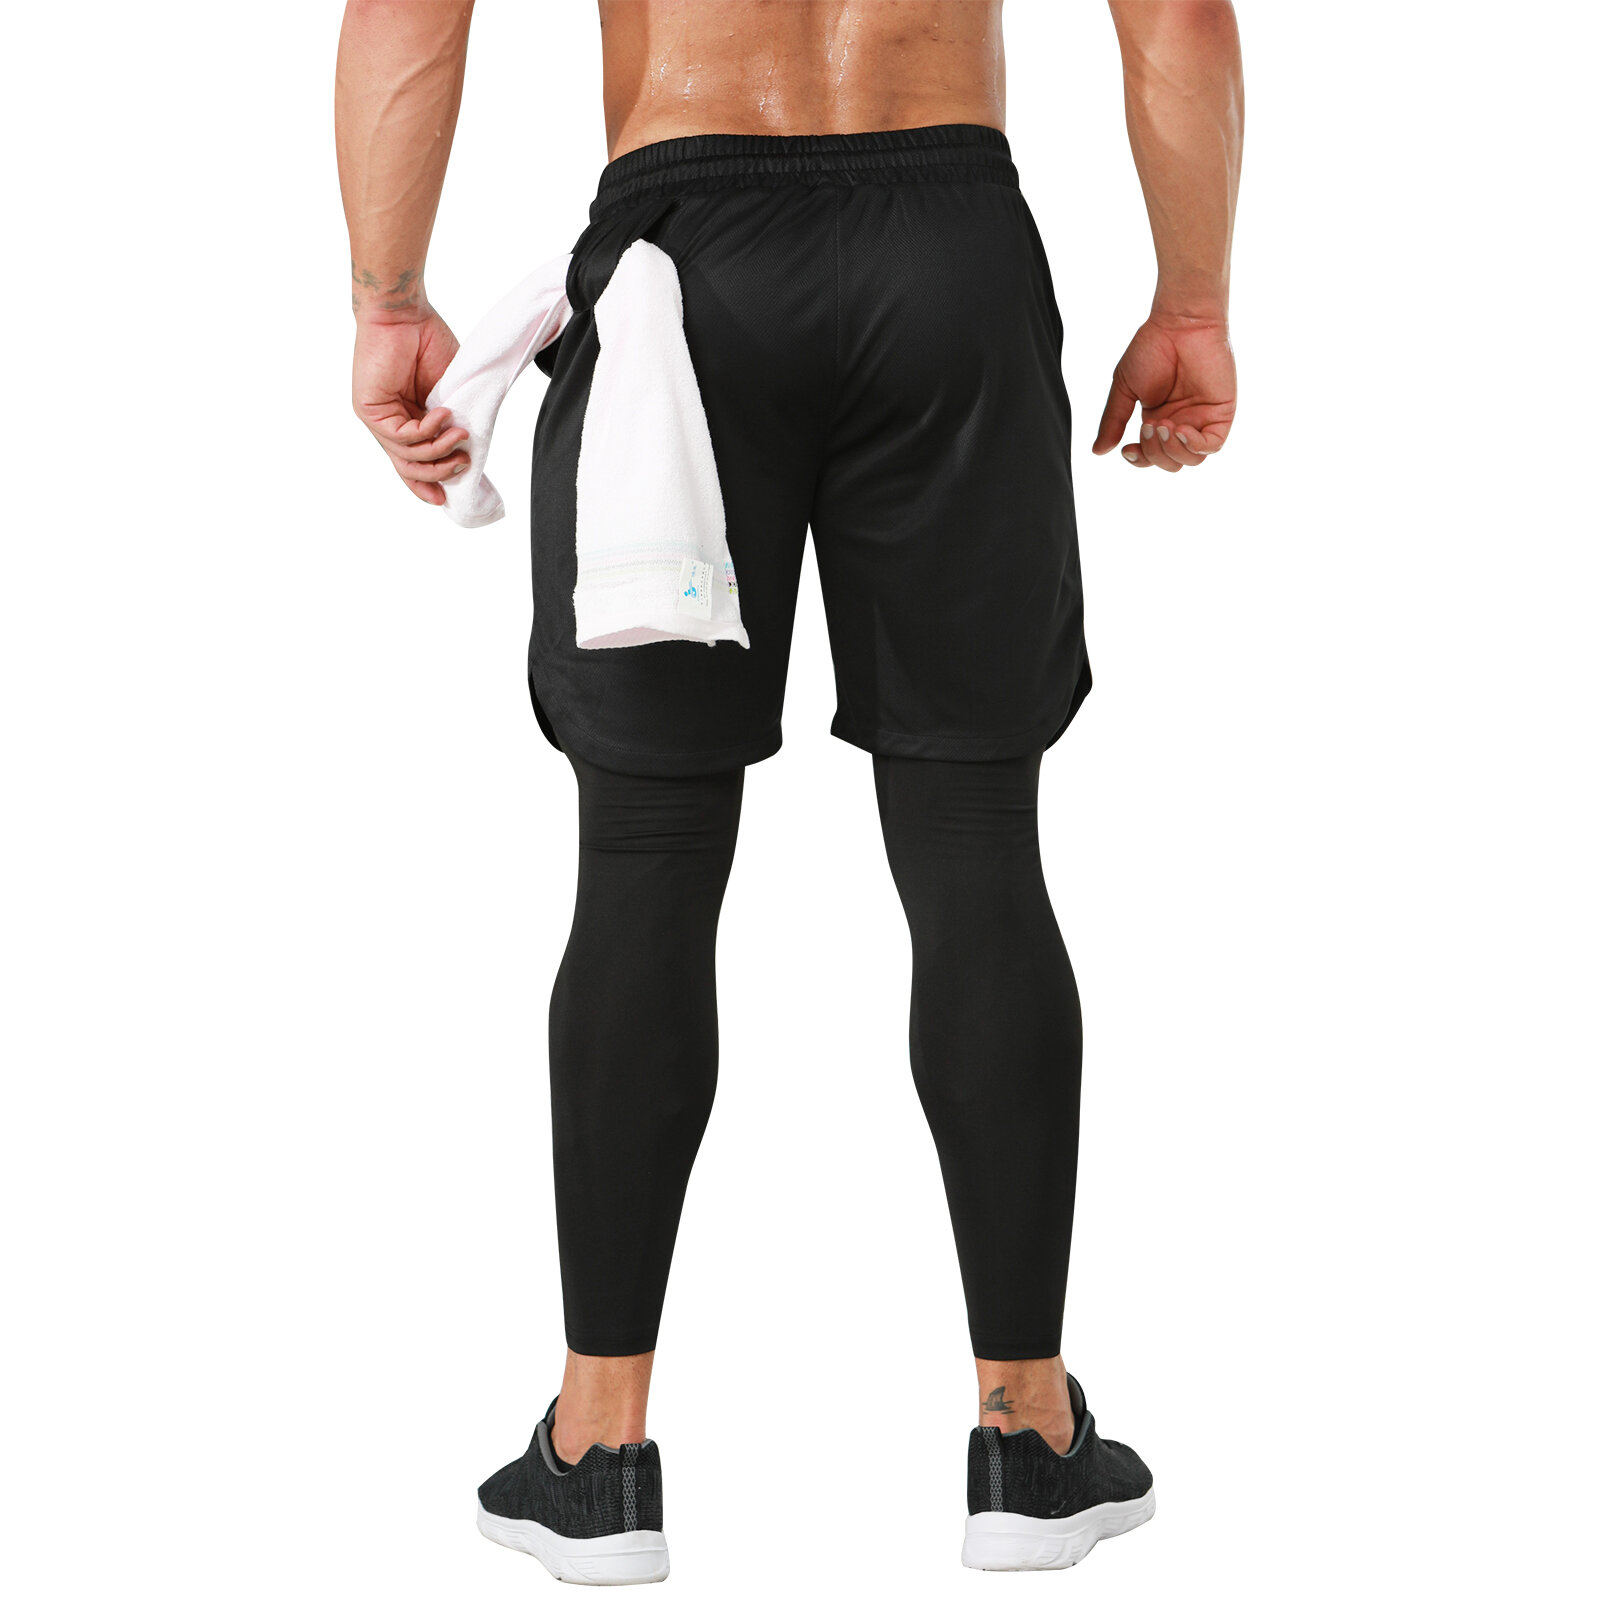 Men's 2 in 1 Workout Legging Shorts With Towel loop - PKAWAY